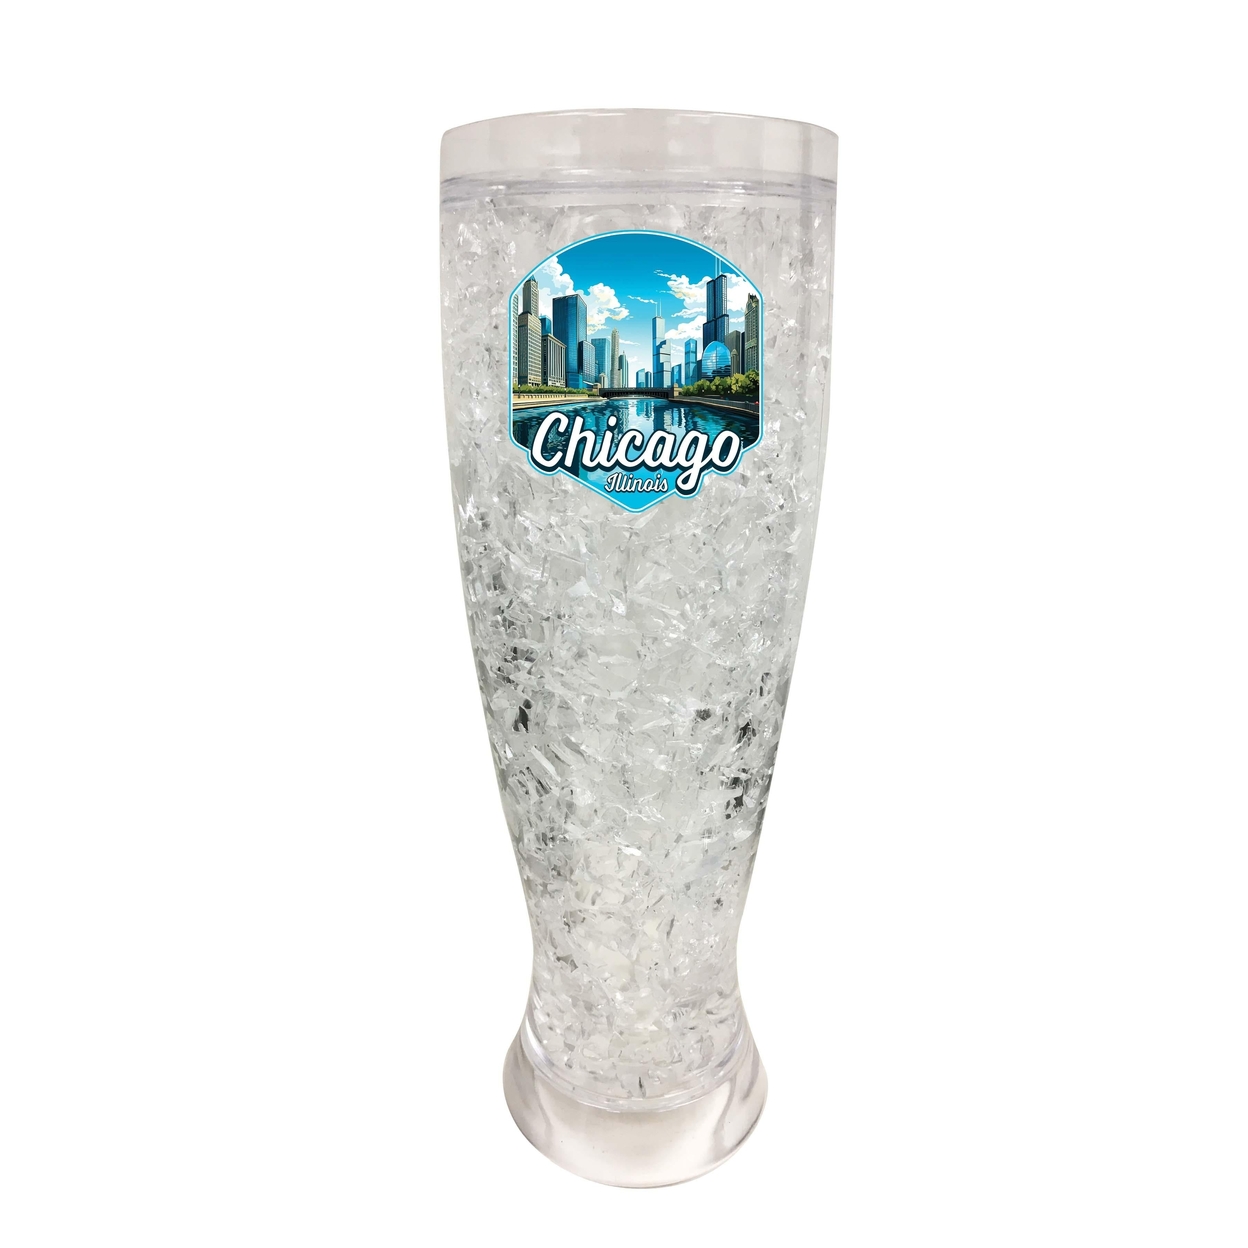 Chicago Illinois A Souvenir 16oz Broken Glass Frosty Mug - 2-Pack